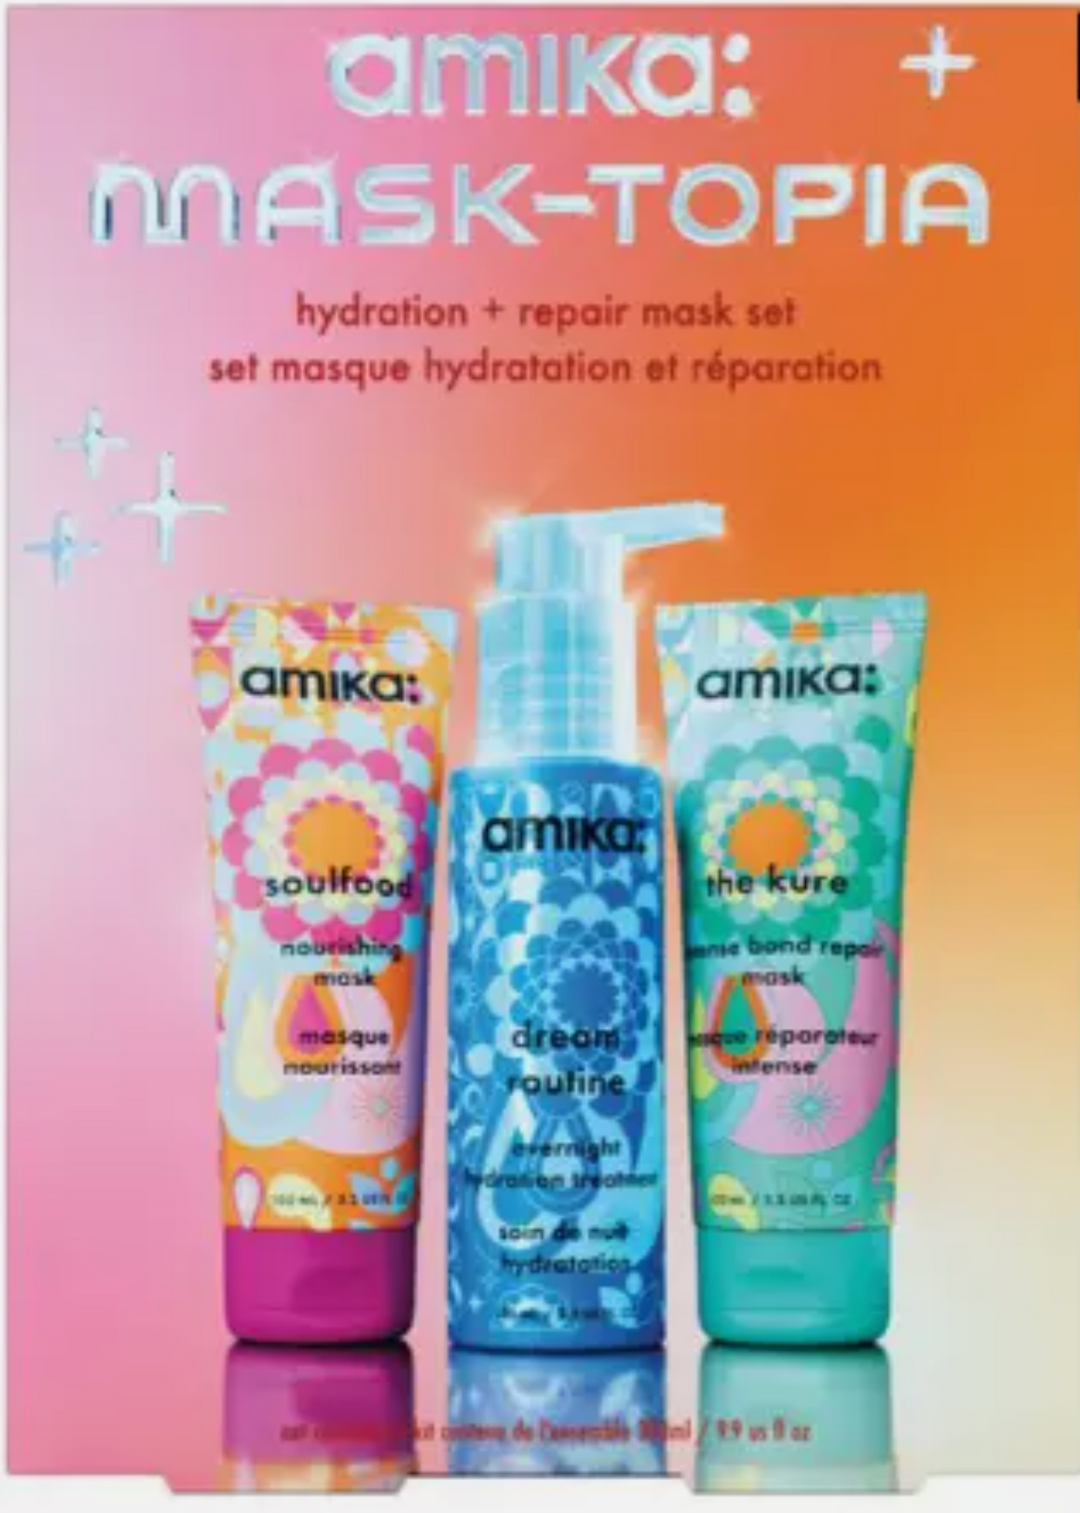 amika Mask-Topia Hydration + Repair Hair Mask Set